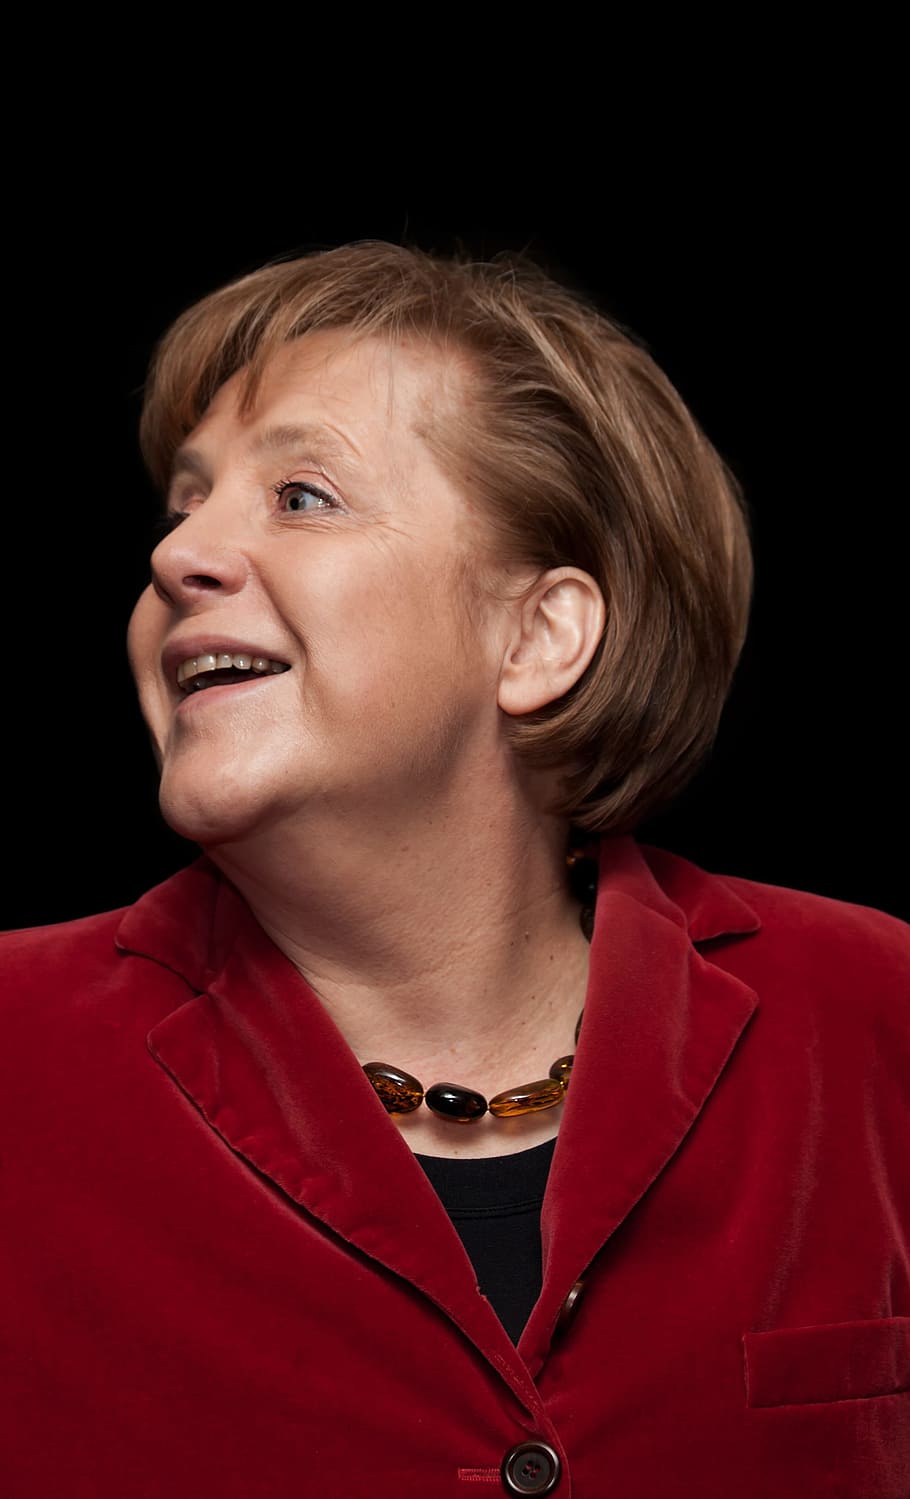  Angela Merkel Hintergrundbild 910x1499. HD Wallpaper: Woman In Red Button Up Top On Black Background, Angela Merkel